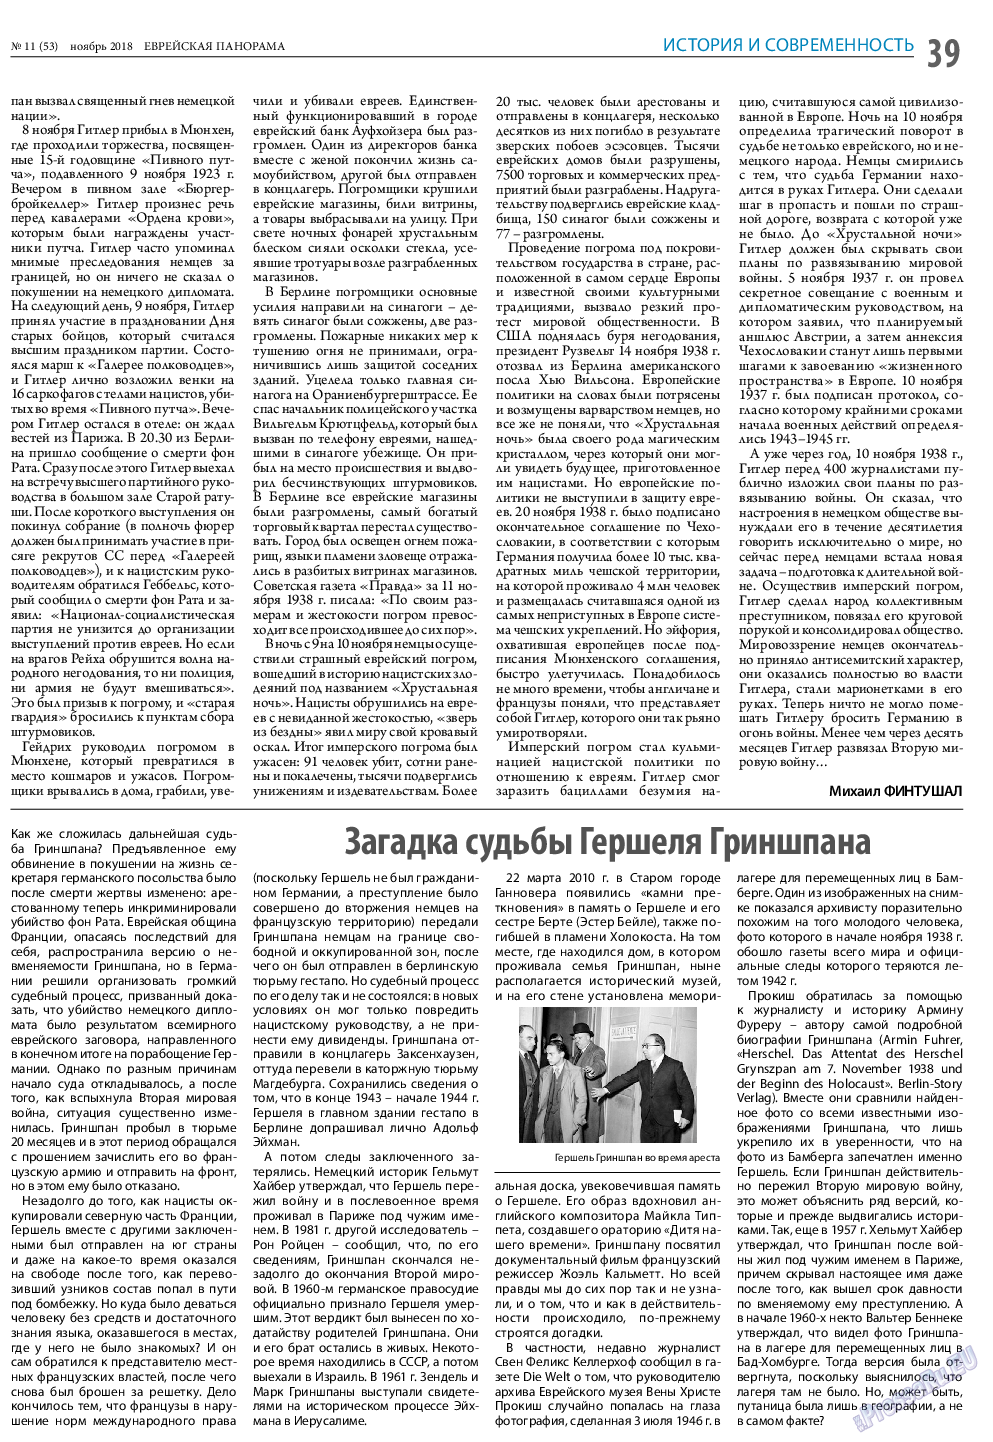 Еврейская панорама, газета. 2018 №11 стр.39